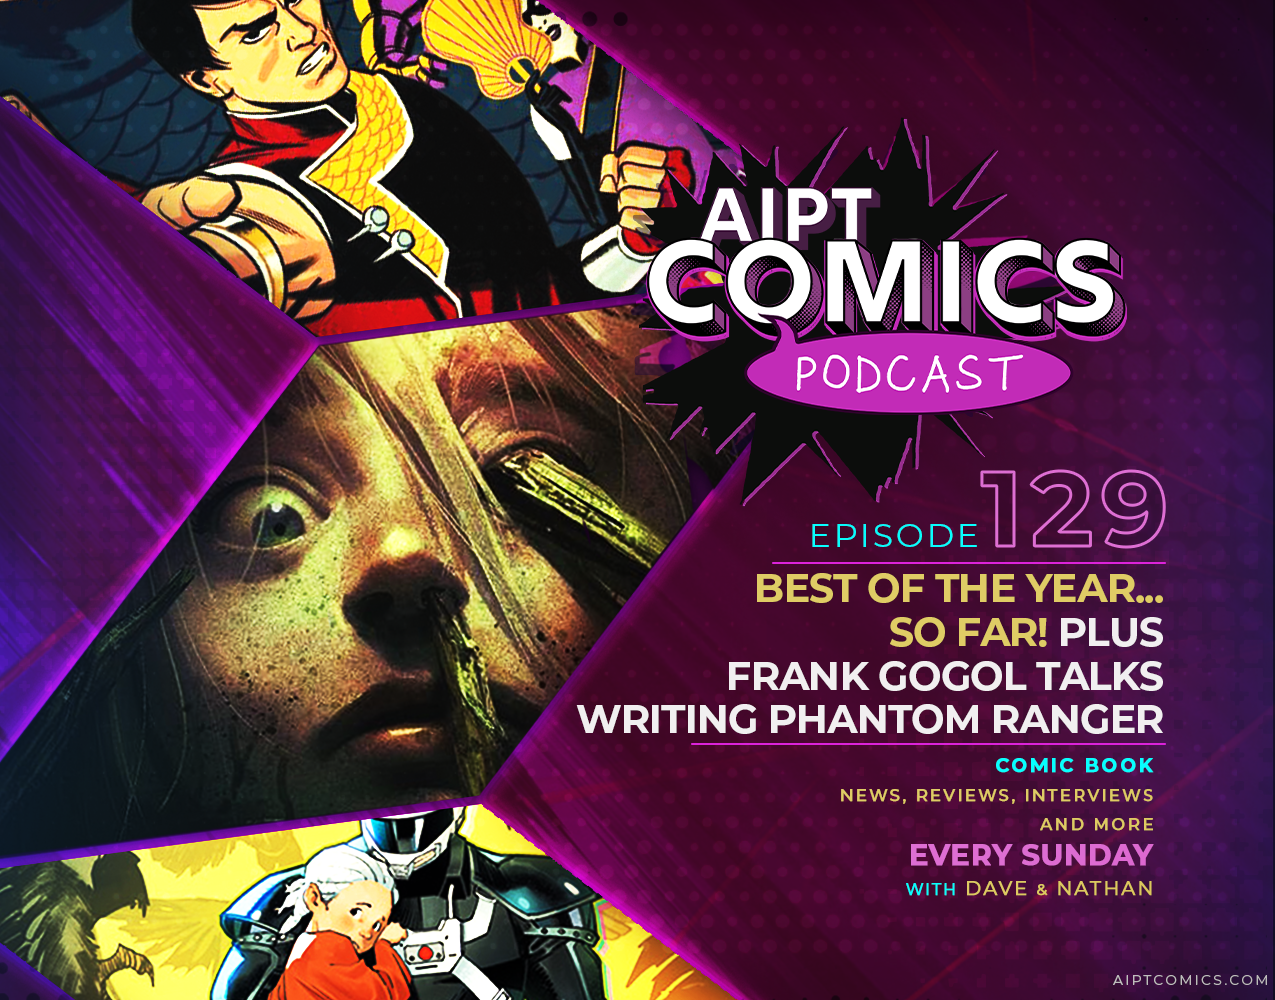 AIPT Comics Podcast Episode 129: Best comics of the year...so far; plus Frank Gogol!